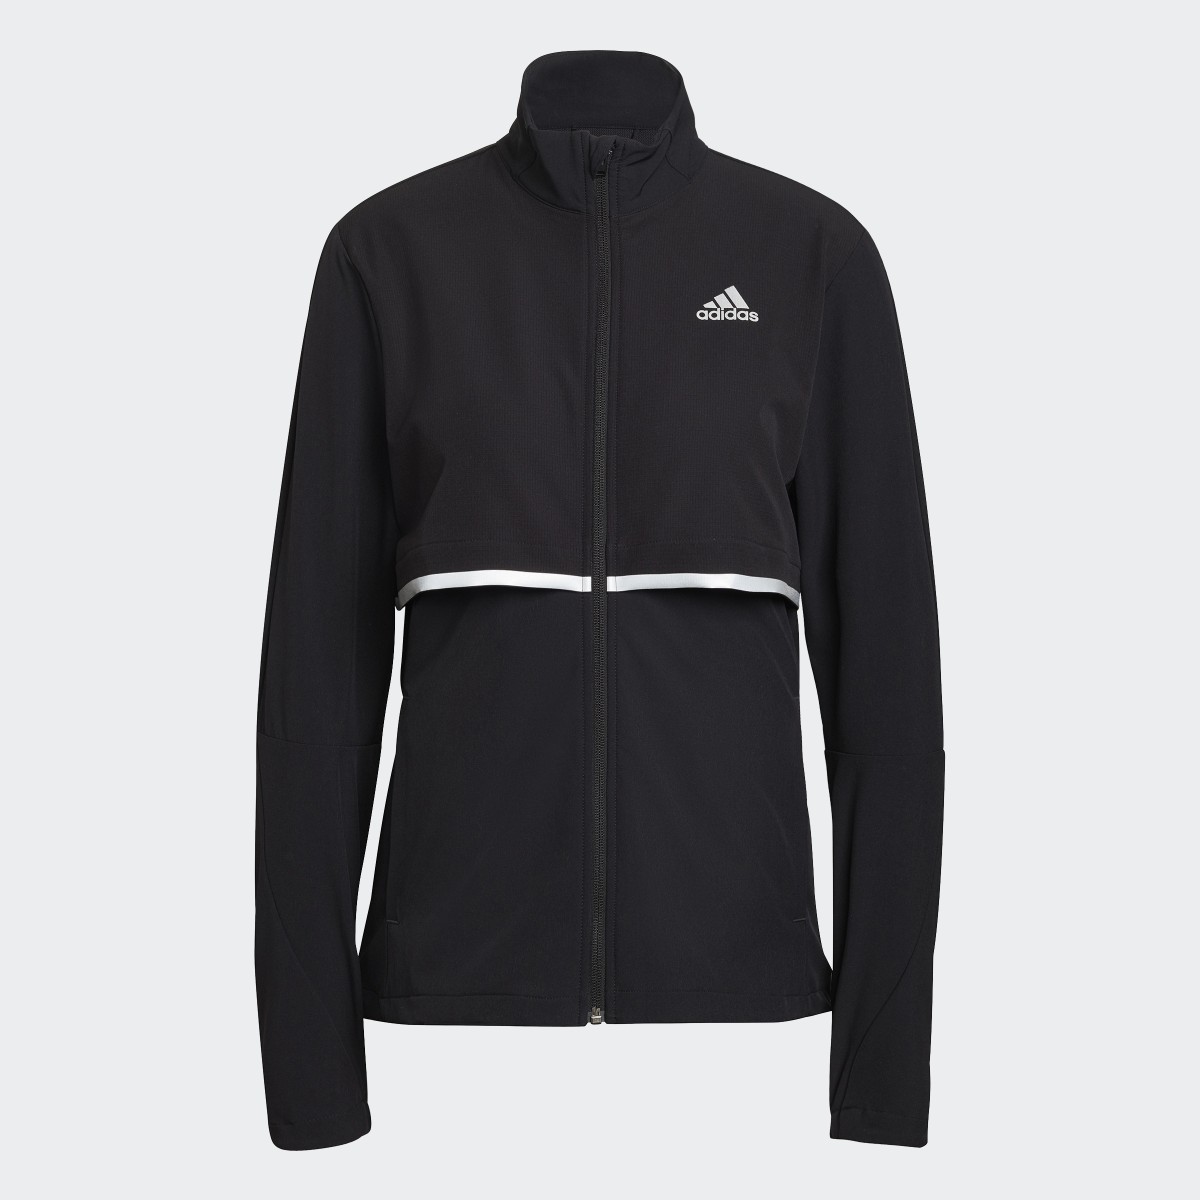 Adidas Own The Run Soft Shell Jacket. 5